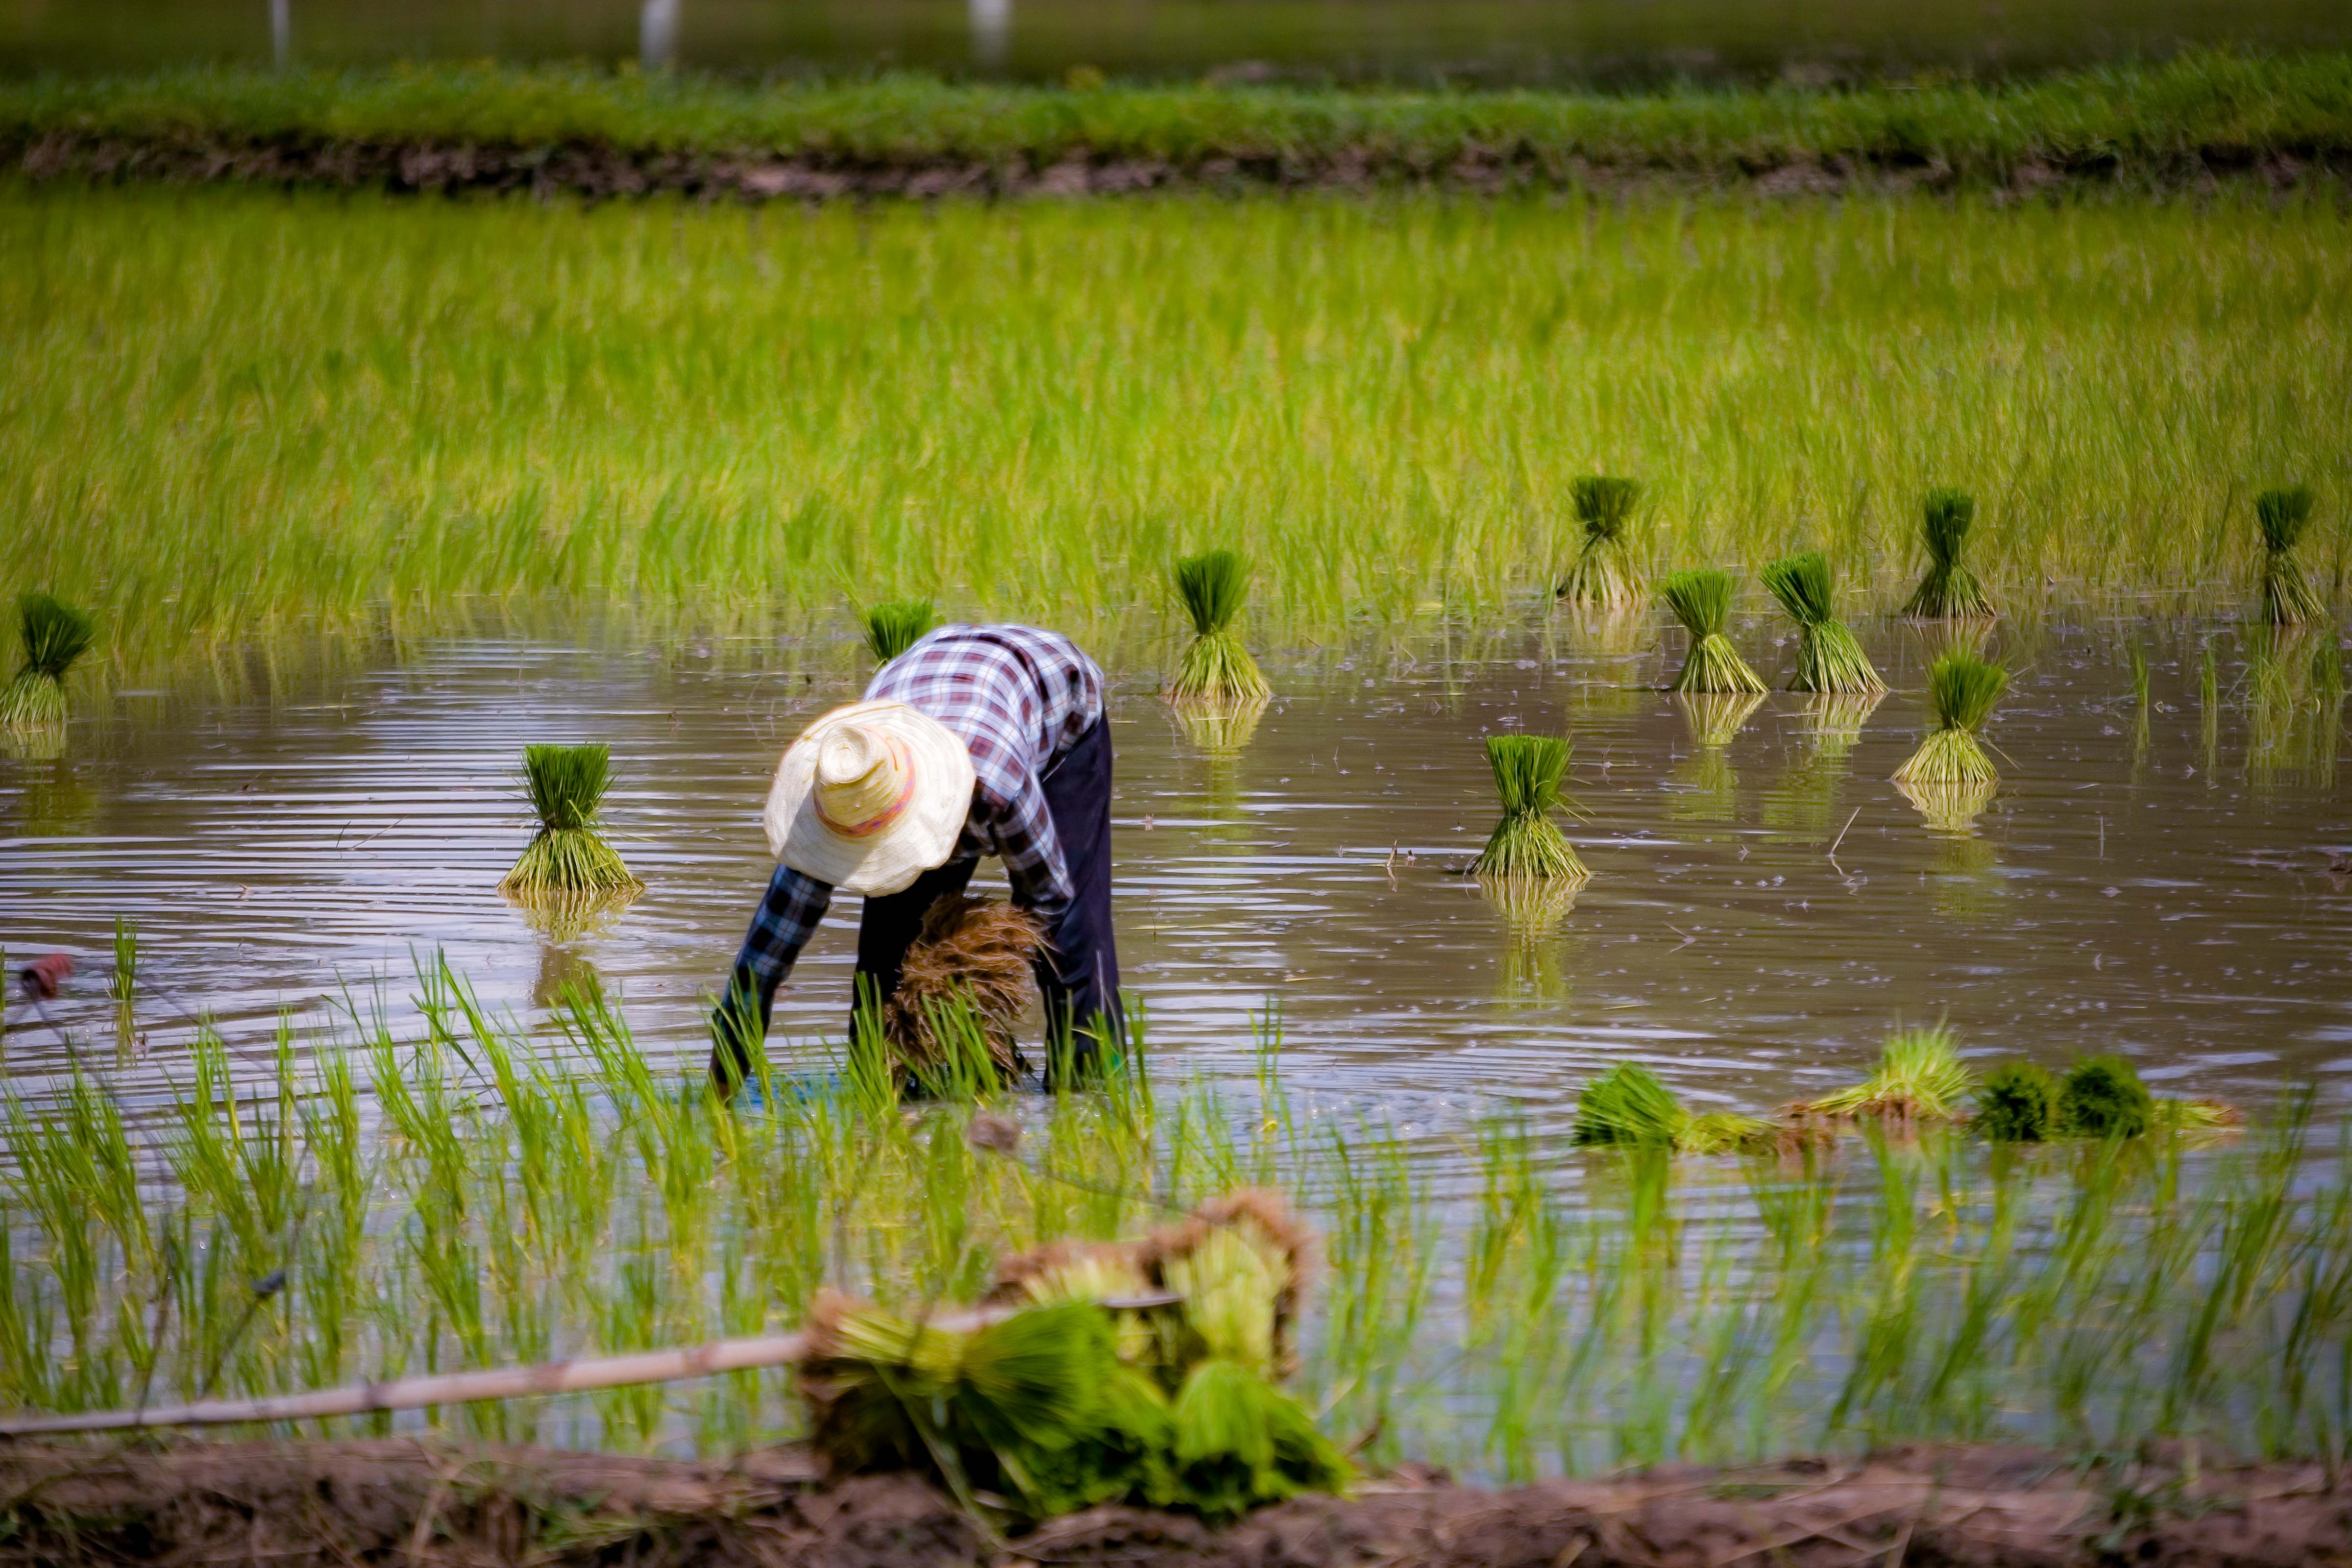 Thailand, Ulthai Thani Prov, Rice Harvester, 2008, IMG 3266